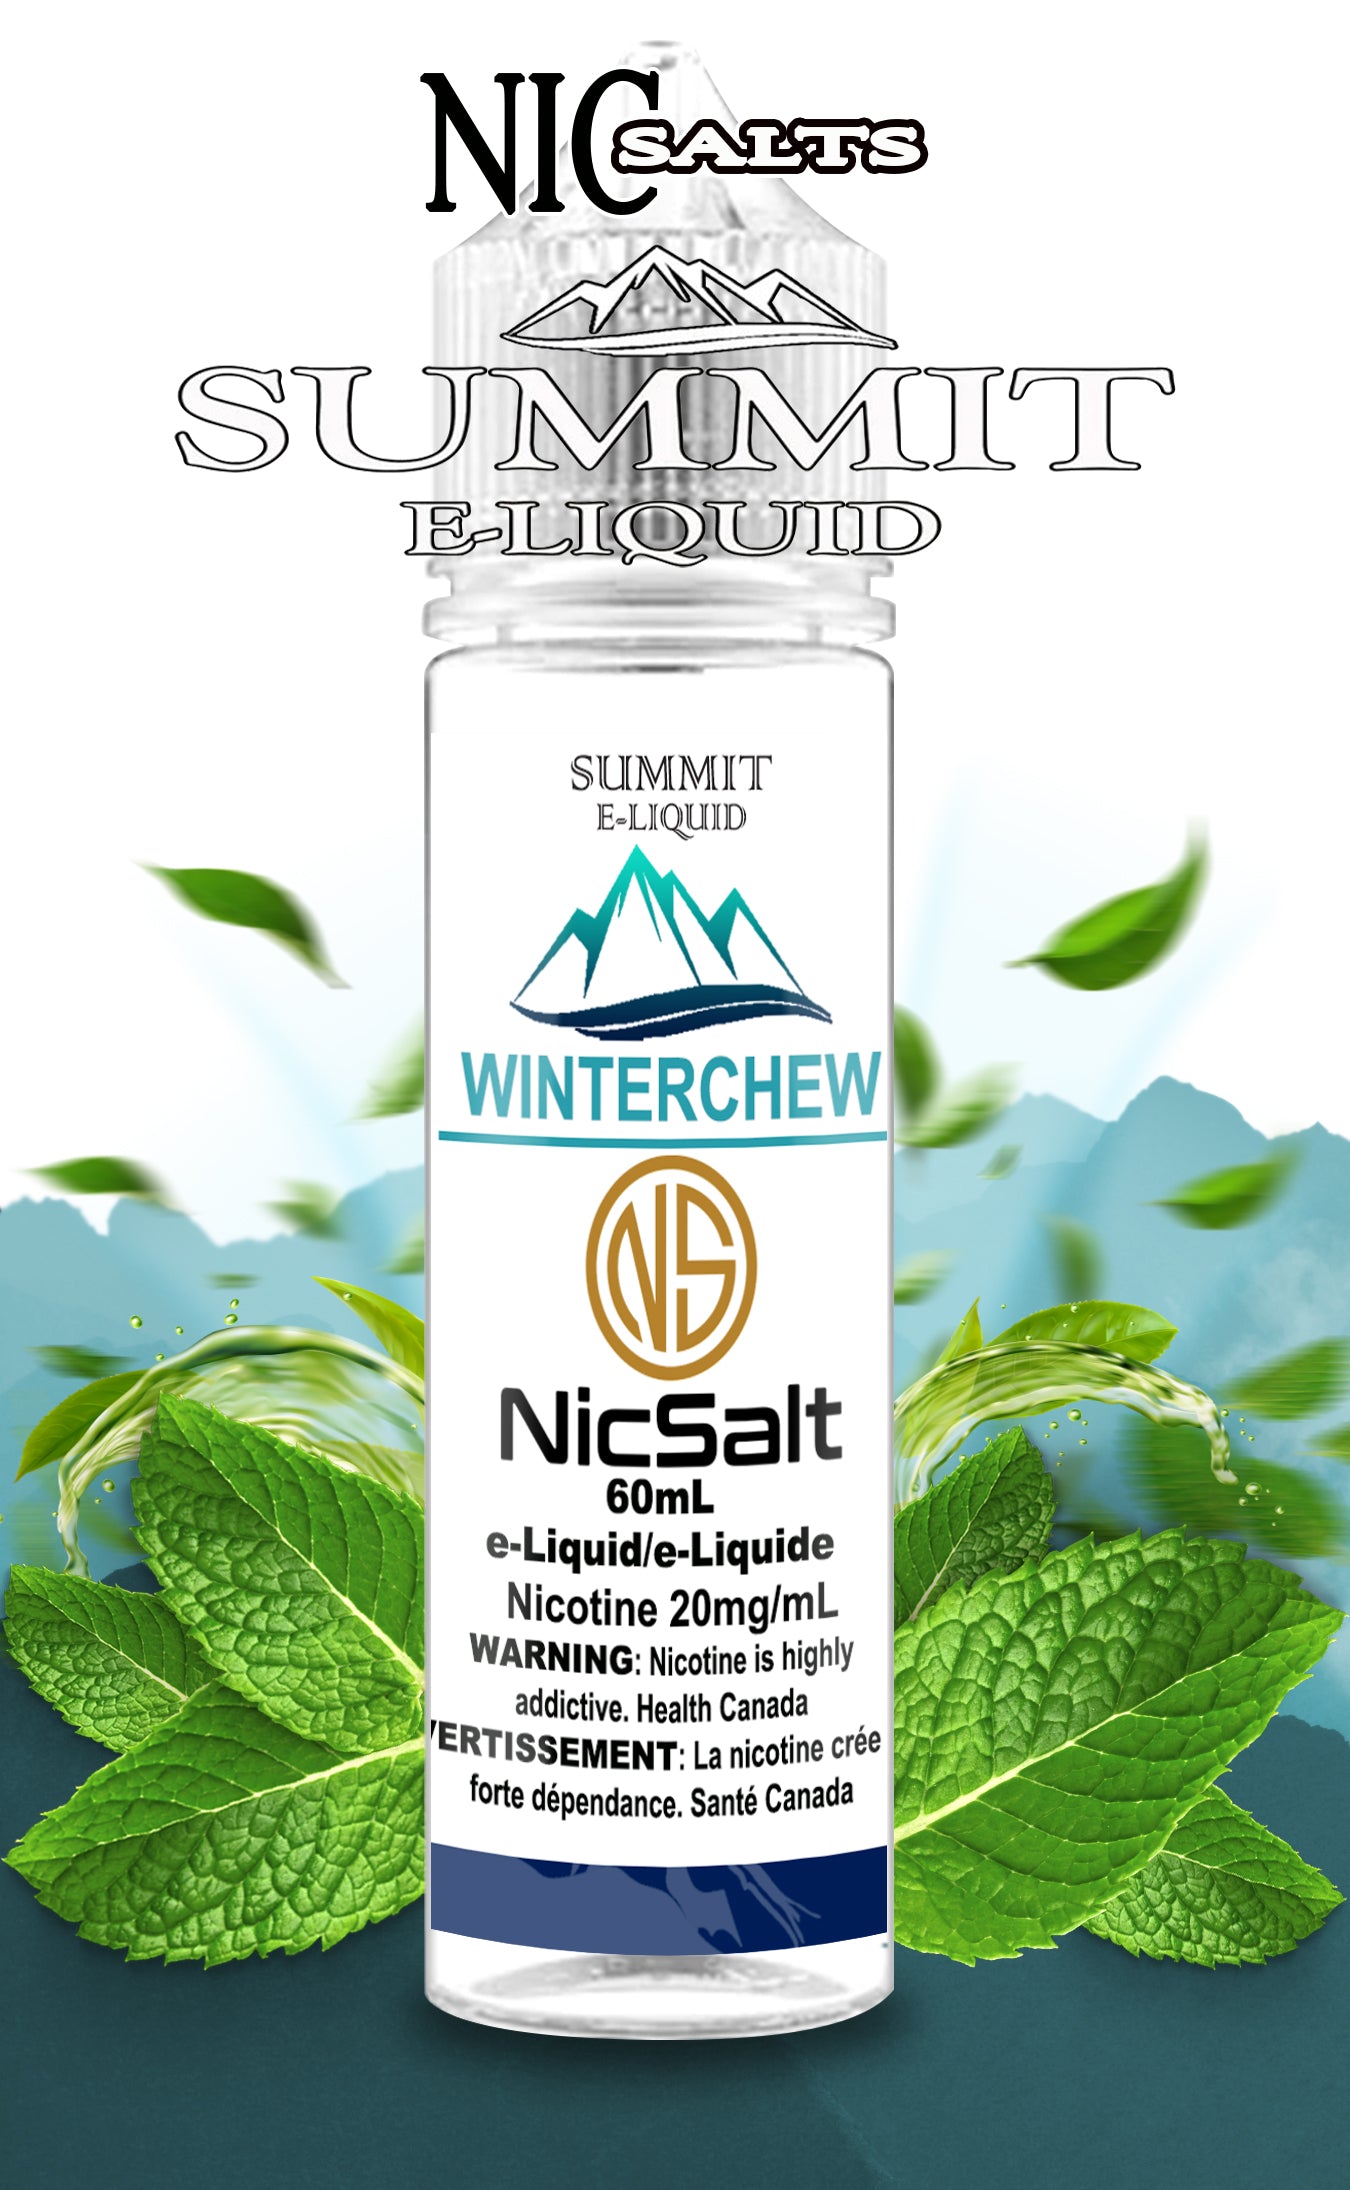 SUMMIT - WINTERCHEW SALT